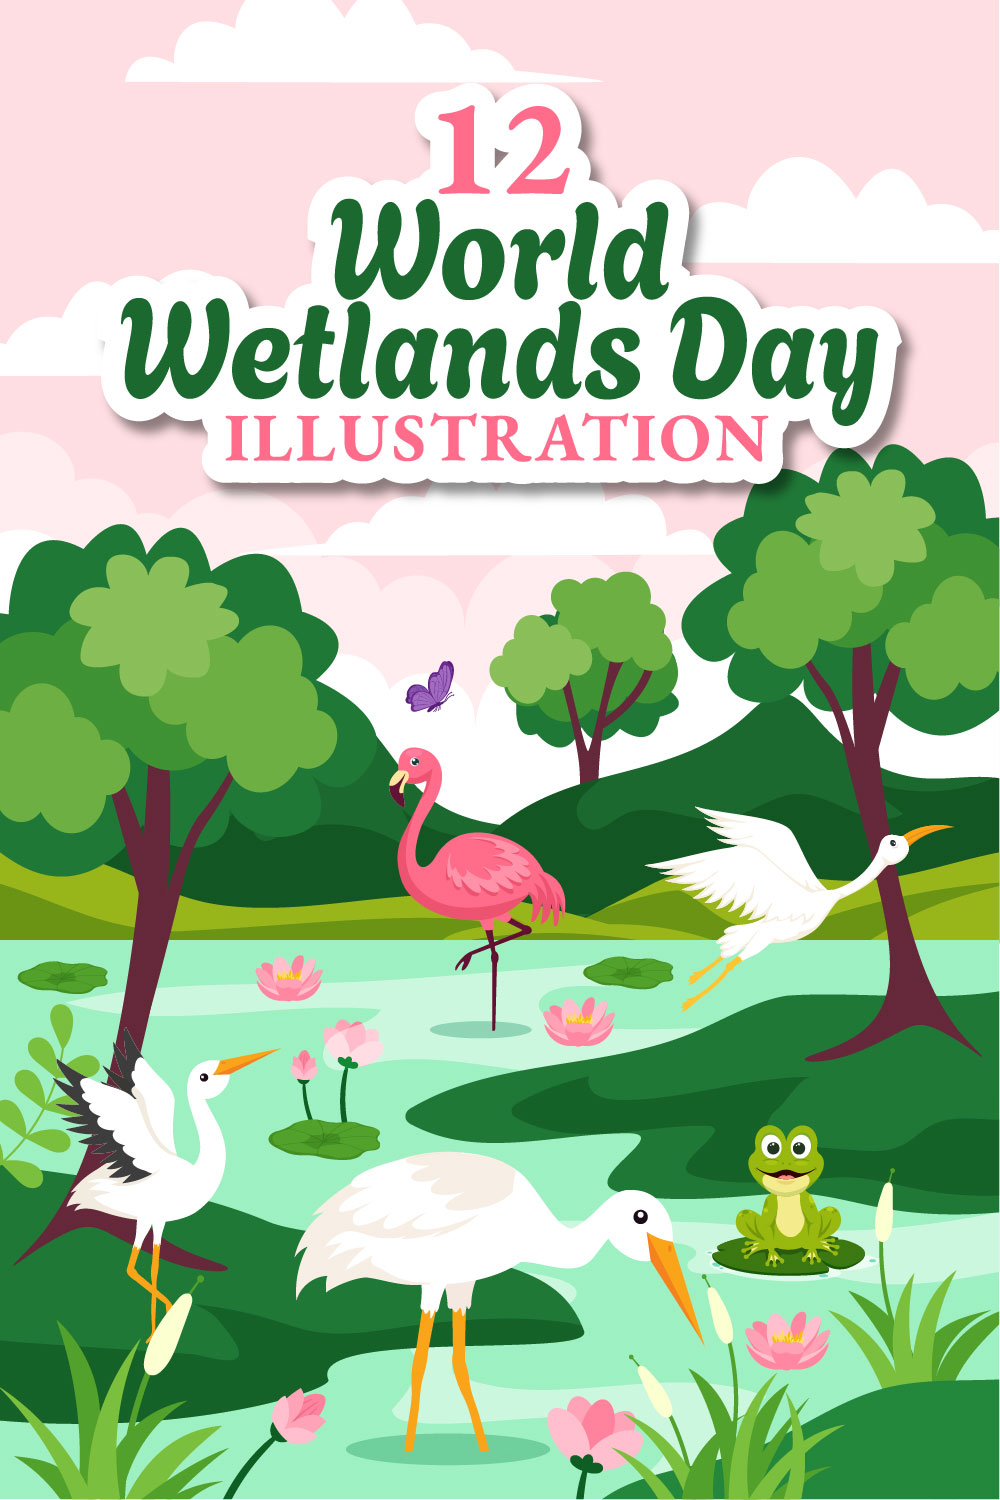 12 World Wetlands Day Illustration pinterest preview image.